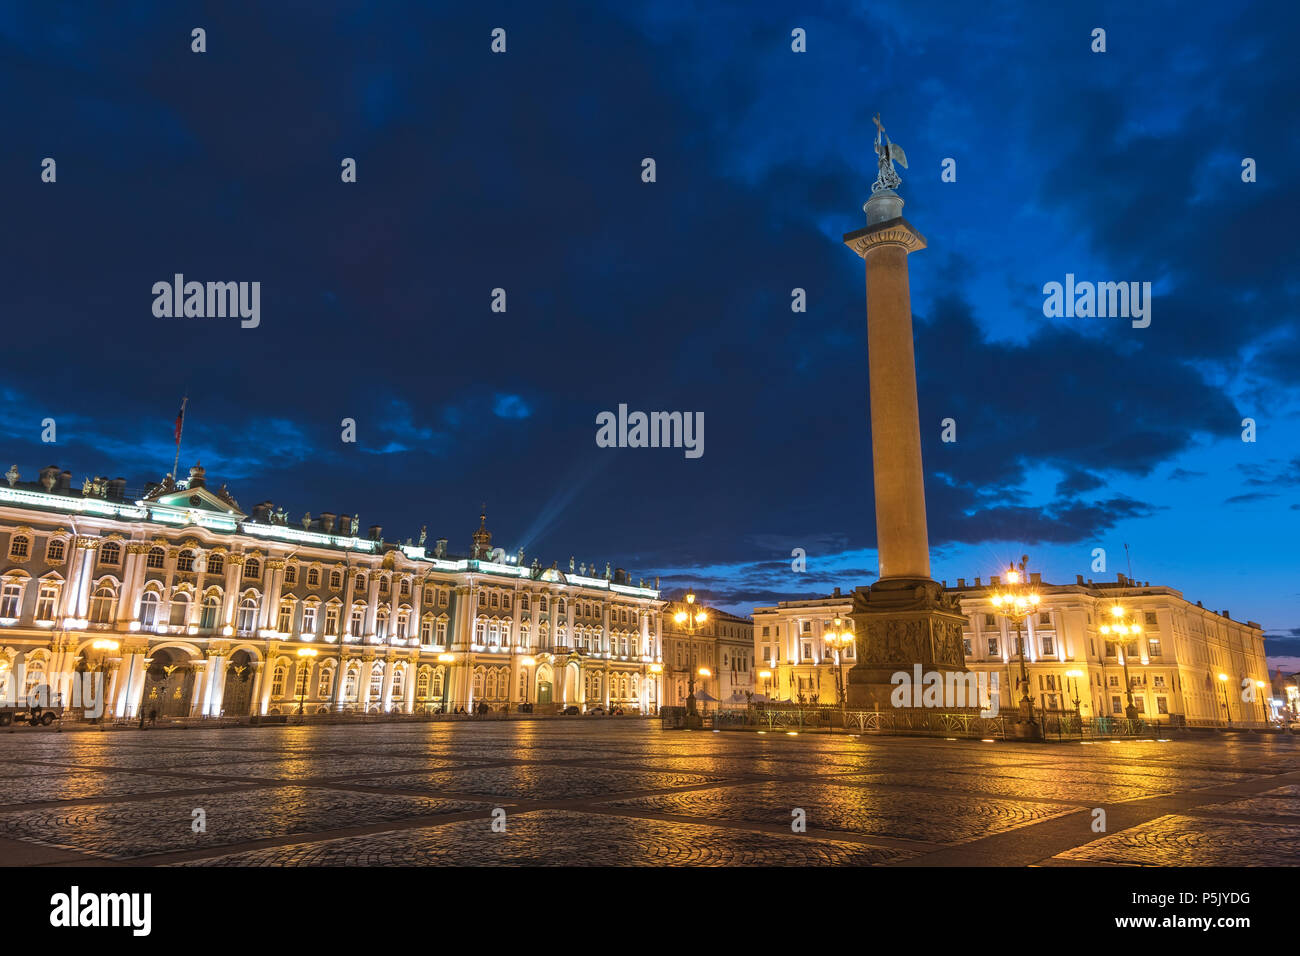 Saint Petersburg night city skyline at Palace Square, Saint Petersburg, Russia Stock Photo